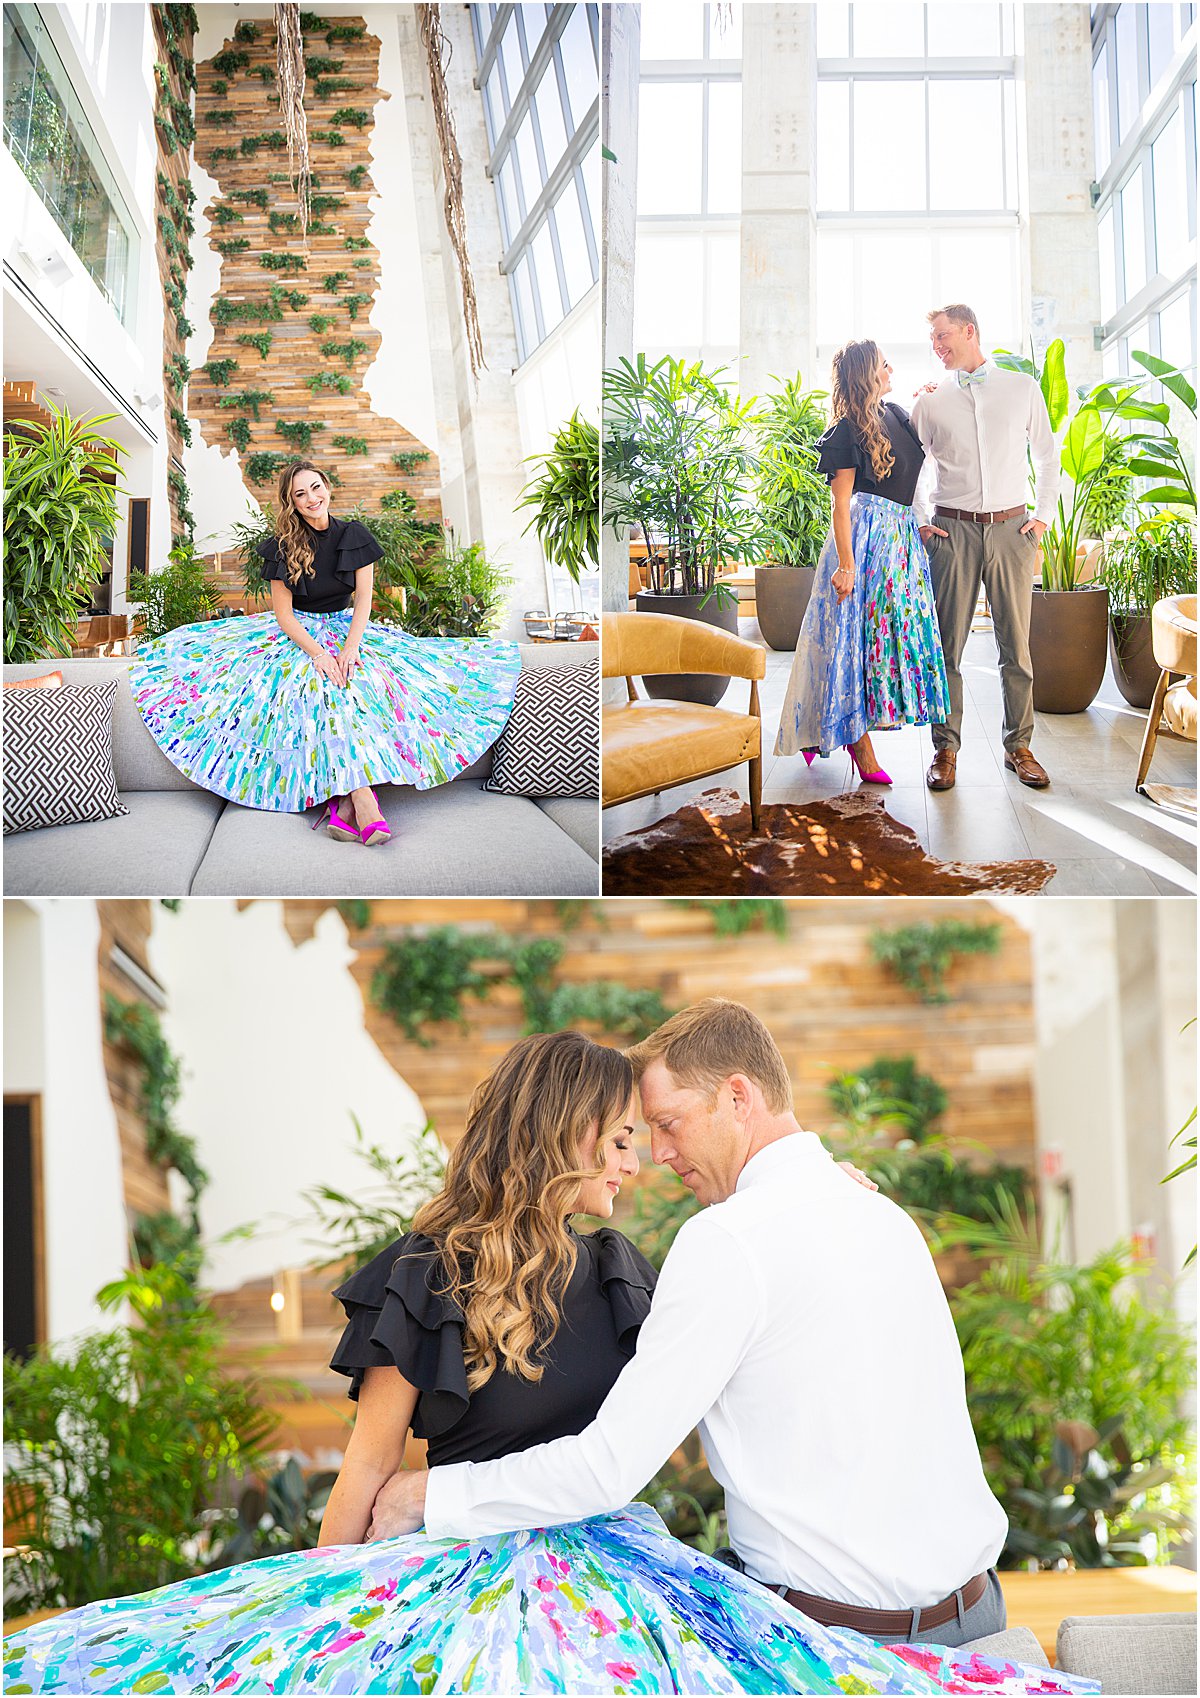 Stunning Micro Wedding | Hotel Wedding Room Block | The Canopy Hotel West Palm Beach Downtown | Married in Palm Beach | www.marriedinpalmbeach.com | Krystal Zaskey Photography